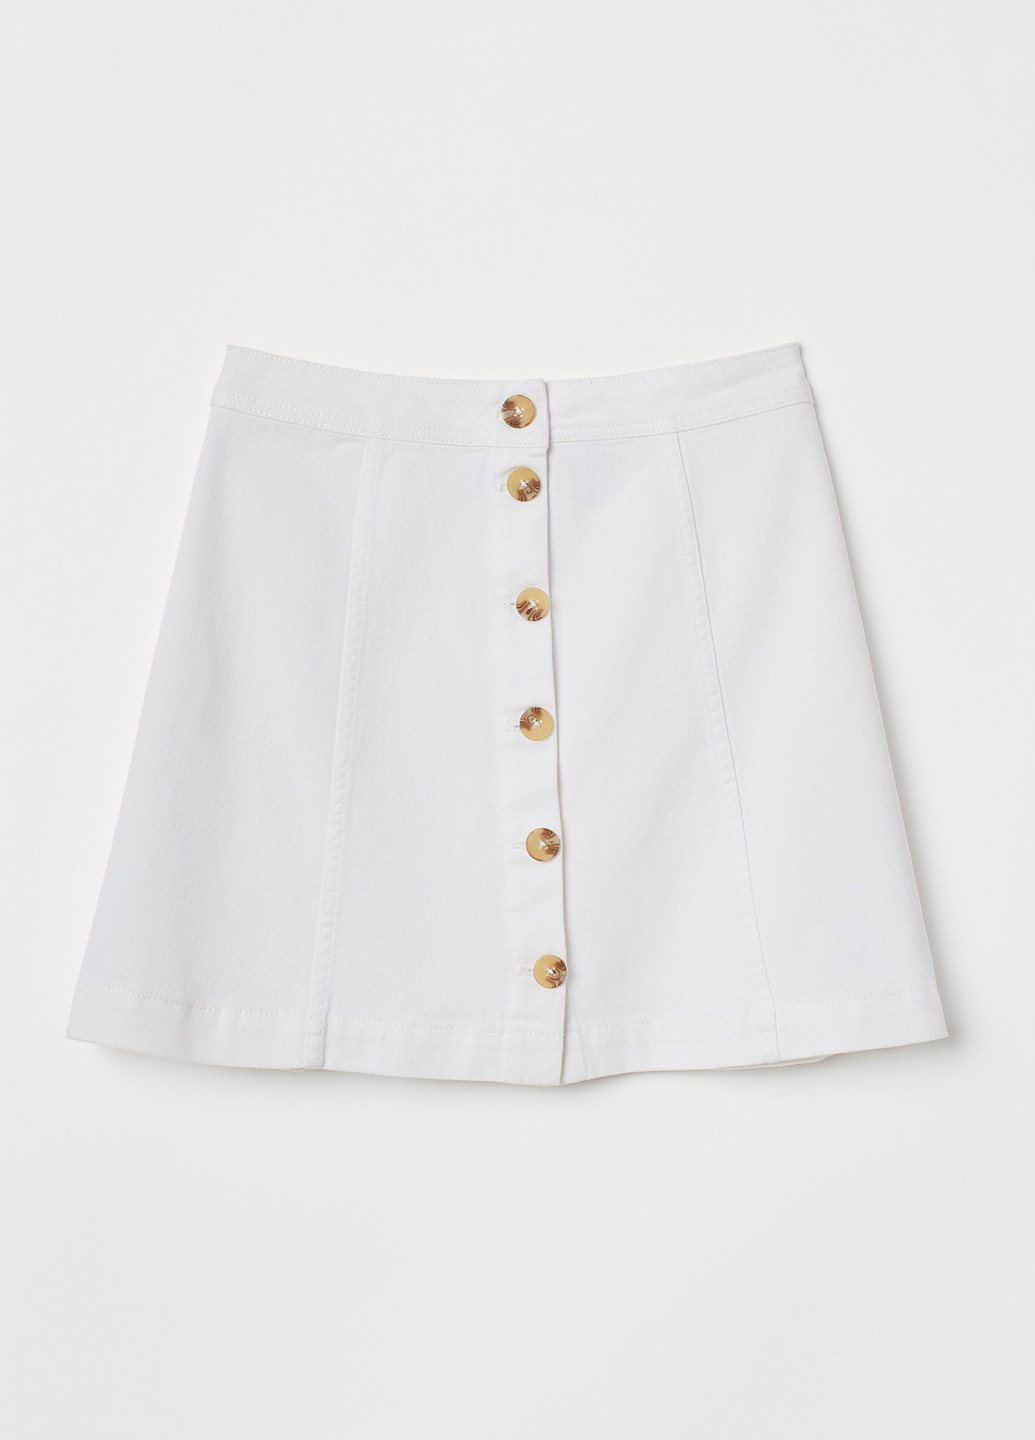 Белая джинсовая однотонная юбка H&M а-силуэта (трапеция)